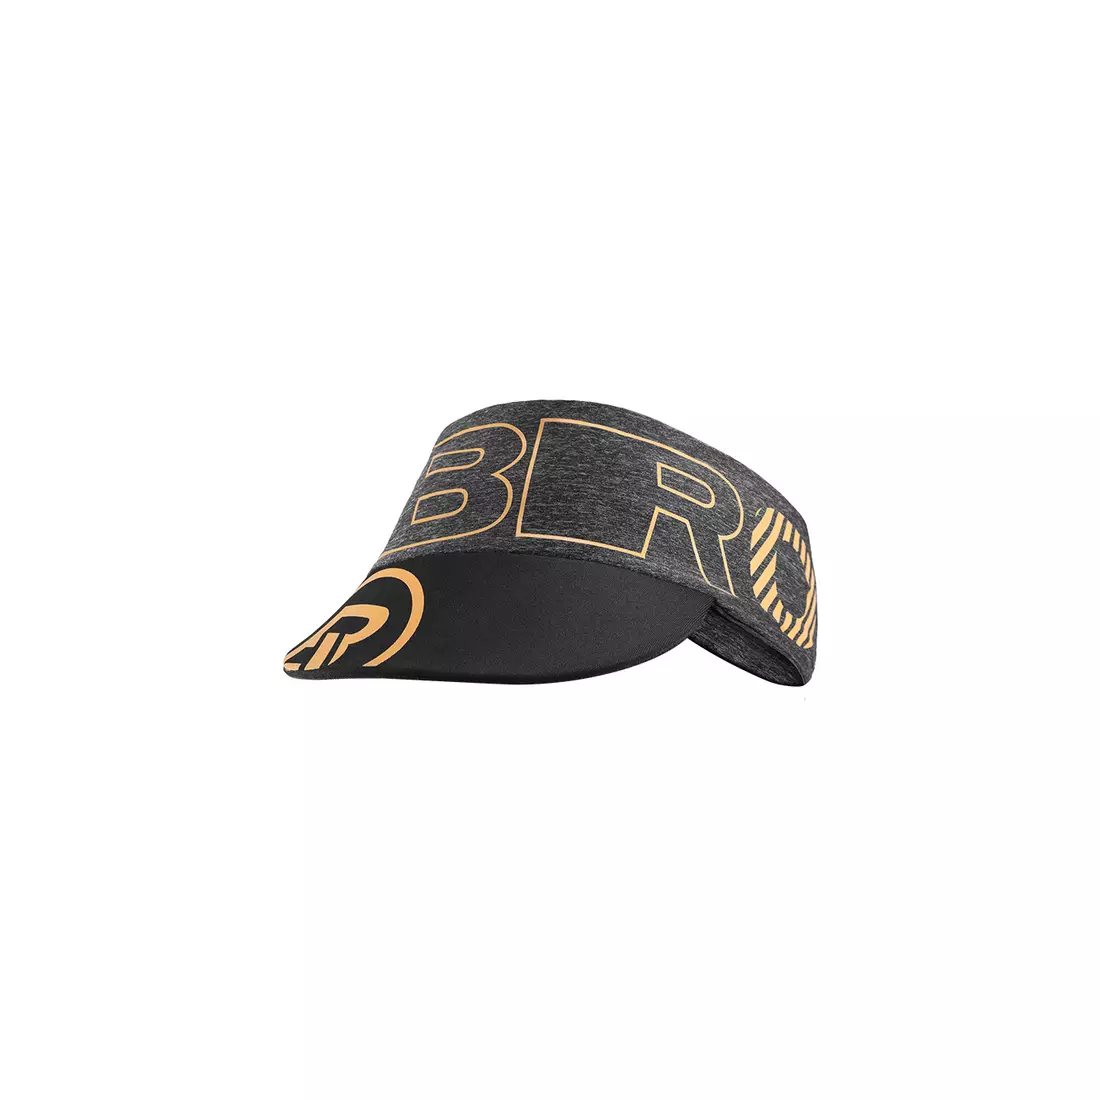 Rockbros sports headband with a visor, black-orange LF7628-2